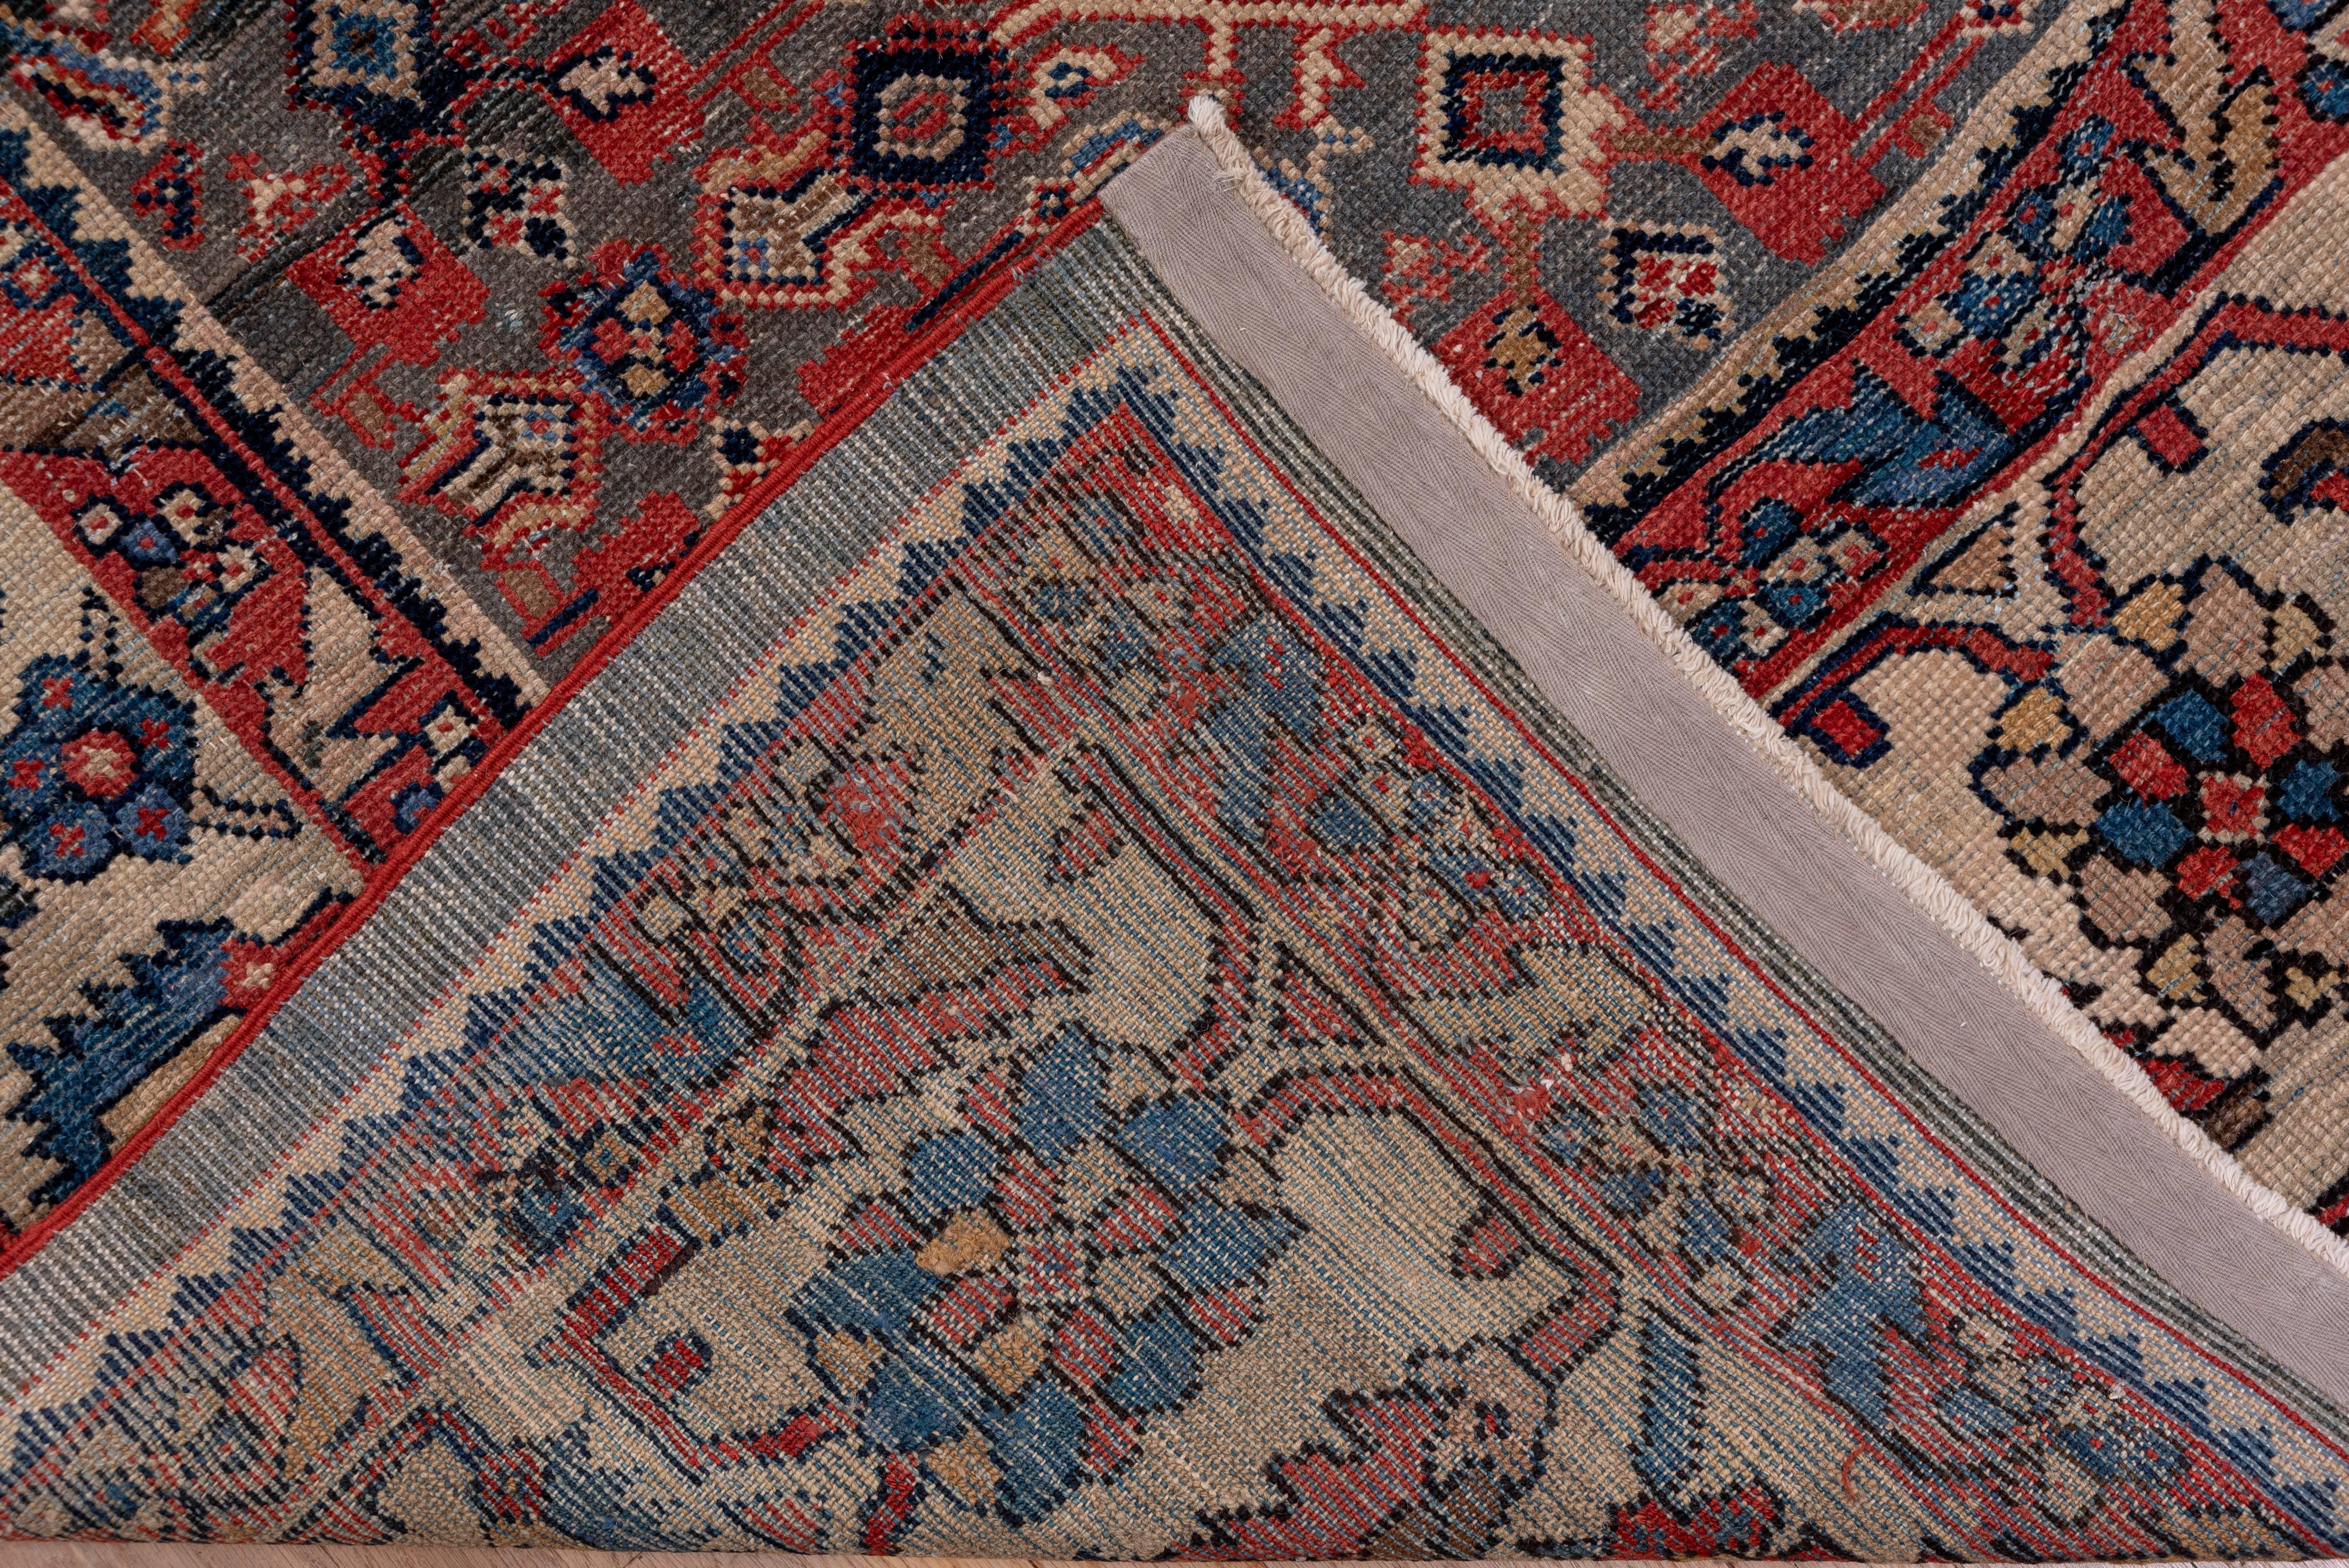 Tribal Antique Mahal Carpet For Sale